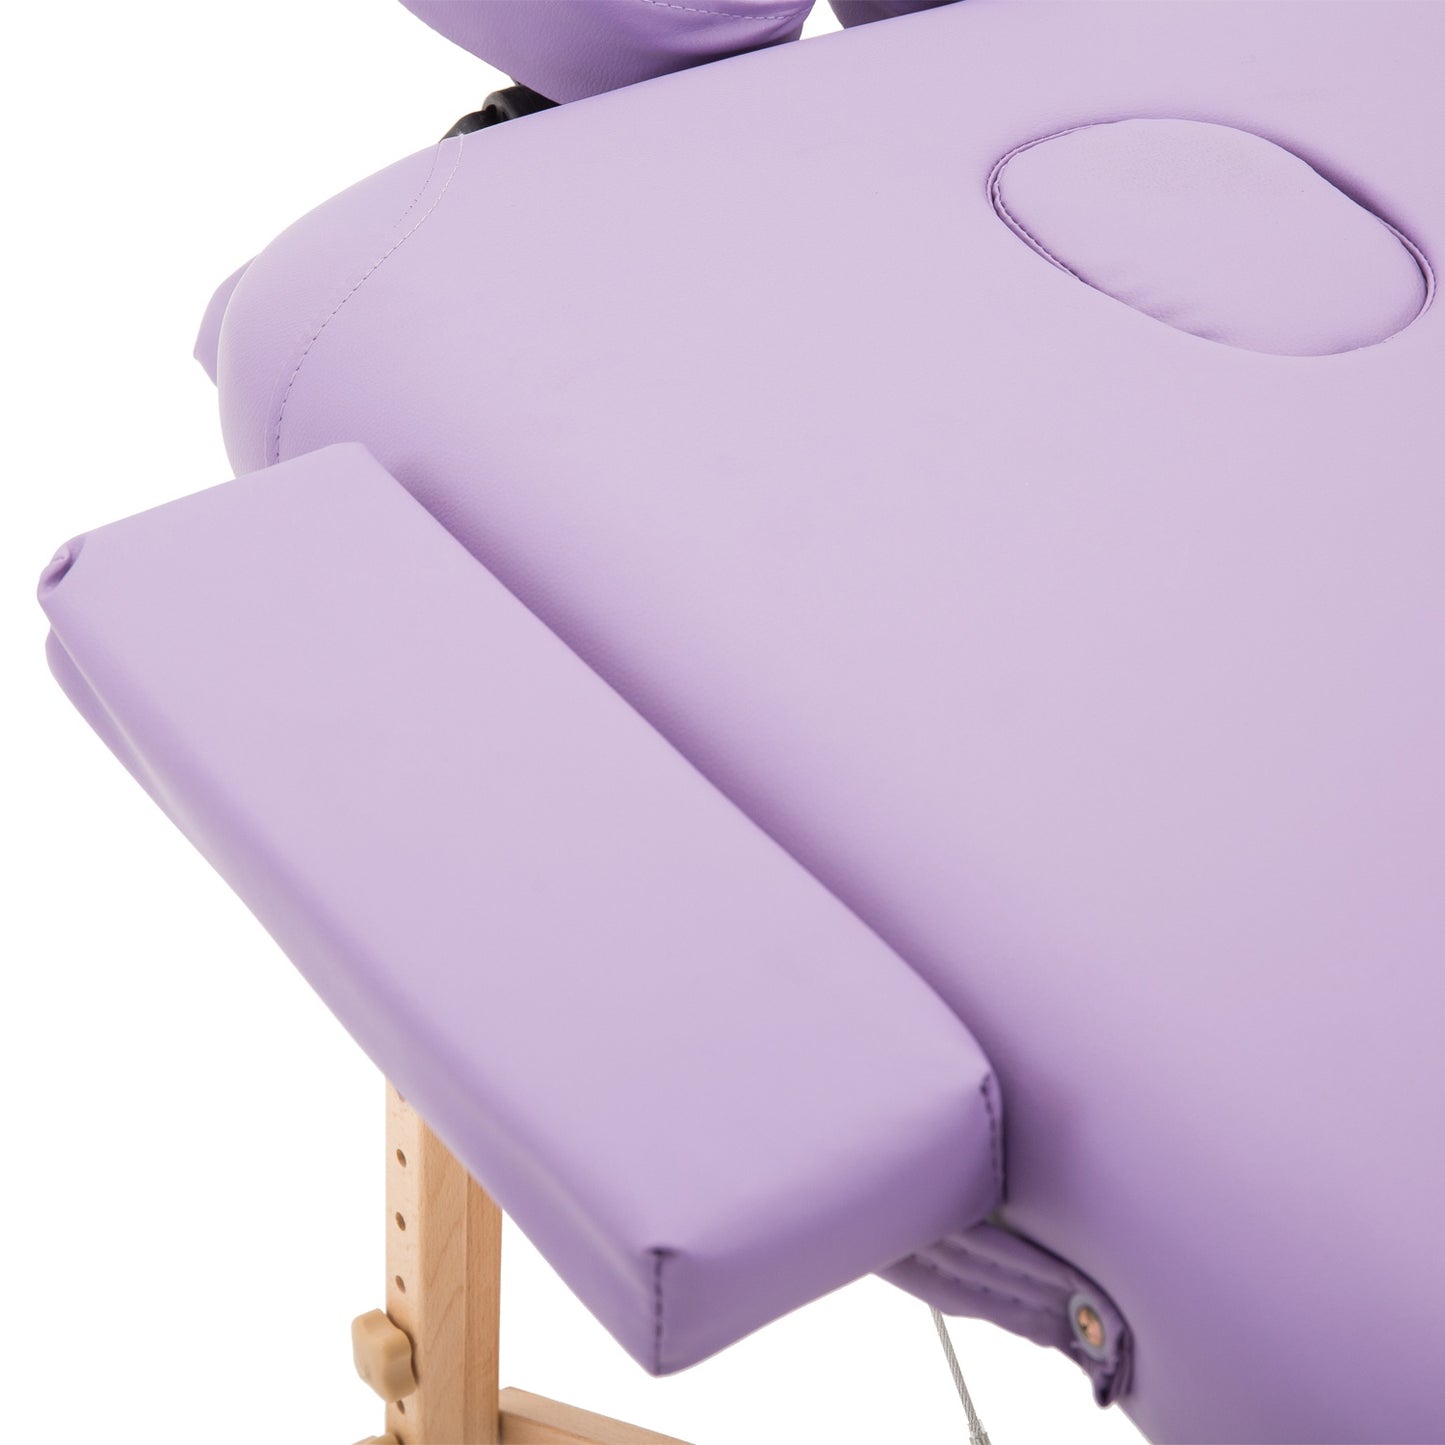 HOMCOM Portable Folding Massage Table, 2 Sections-Purple